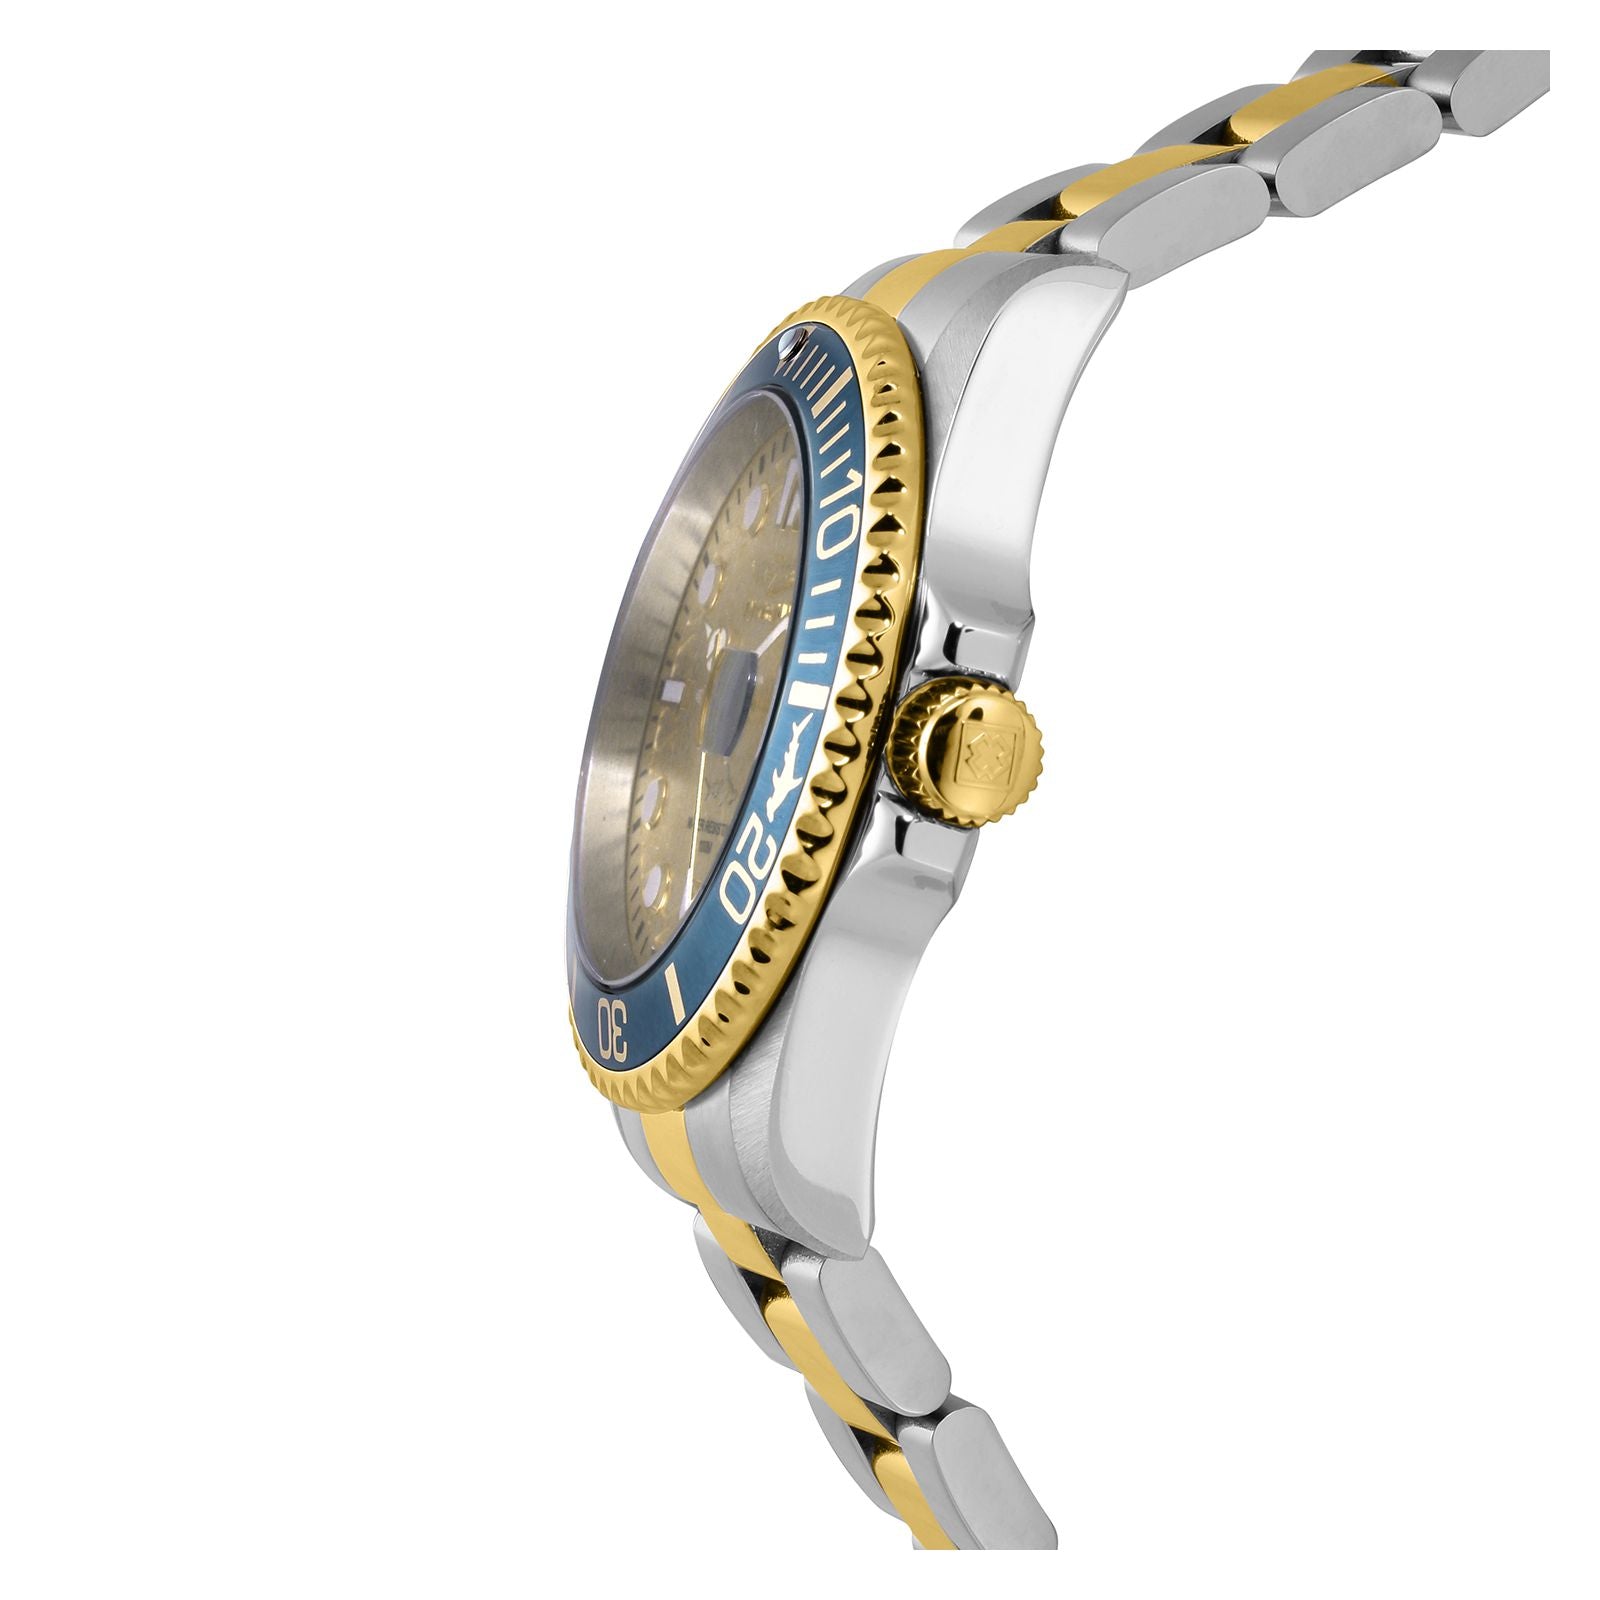 Reloj pulsera Invicta Pro Diver 30022 de cuerpo color plateado, analógico,  para hombre, fondo oro, con